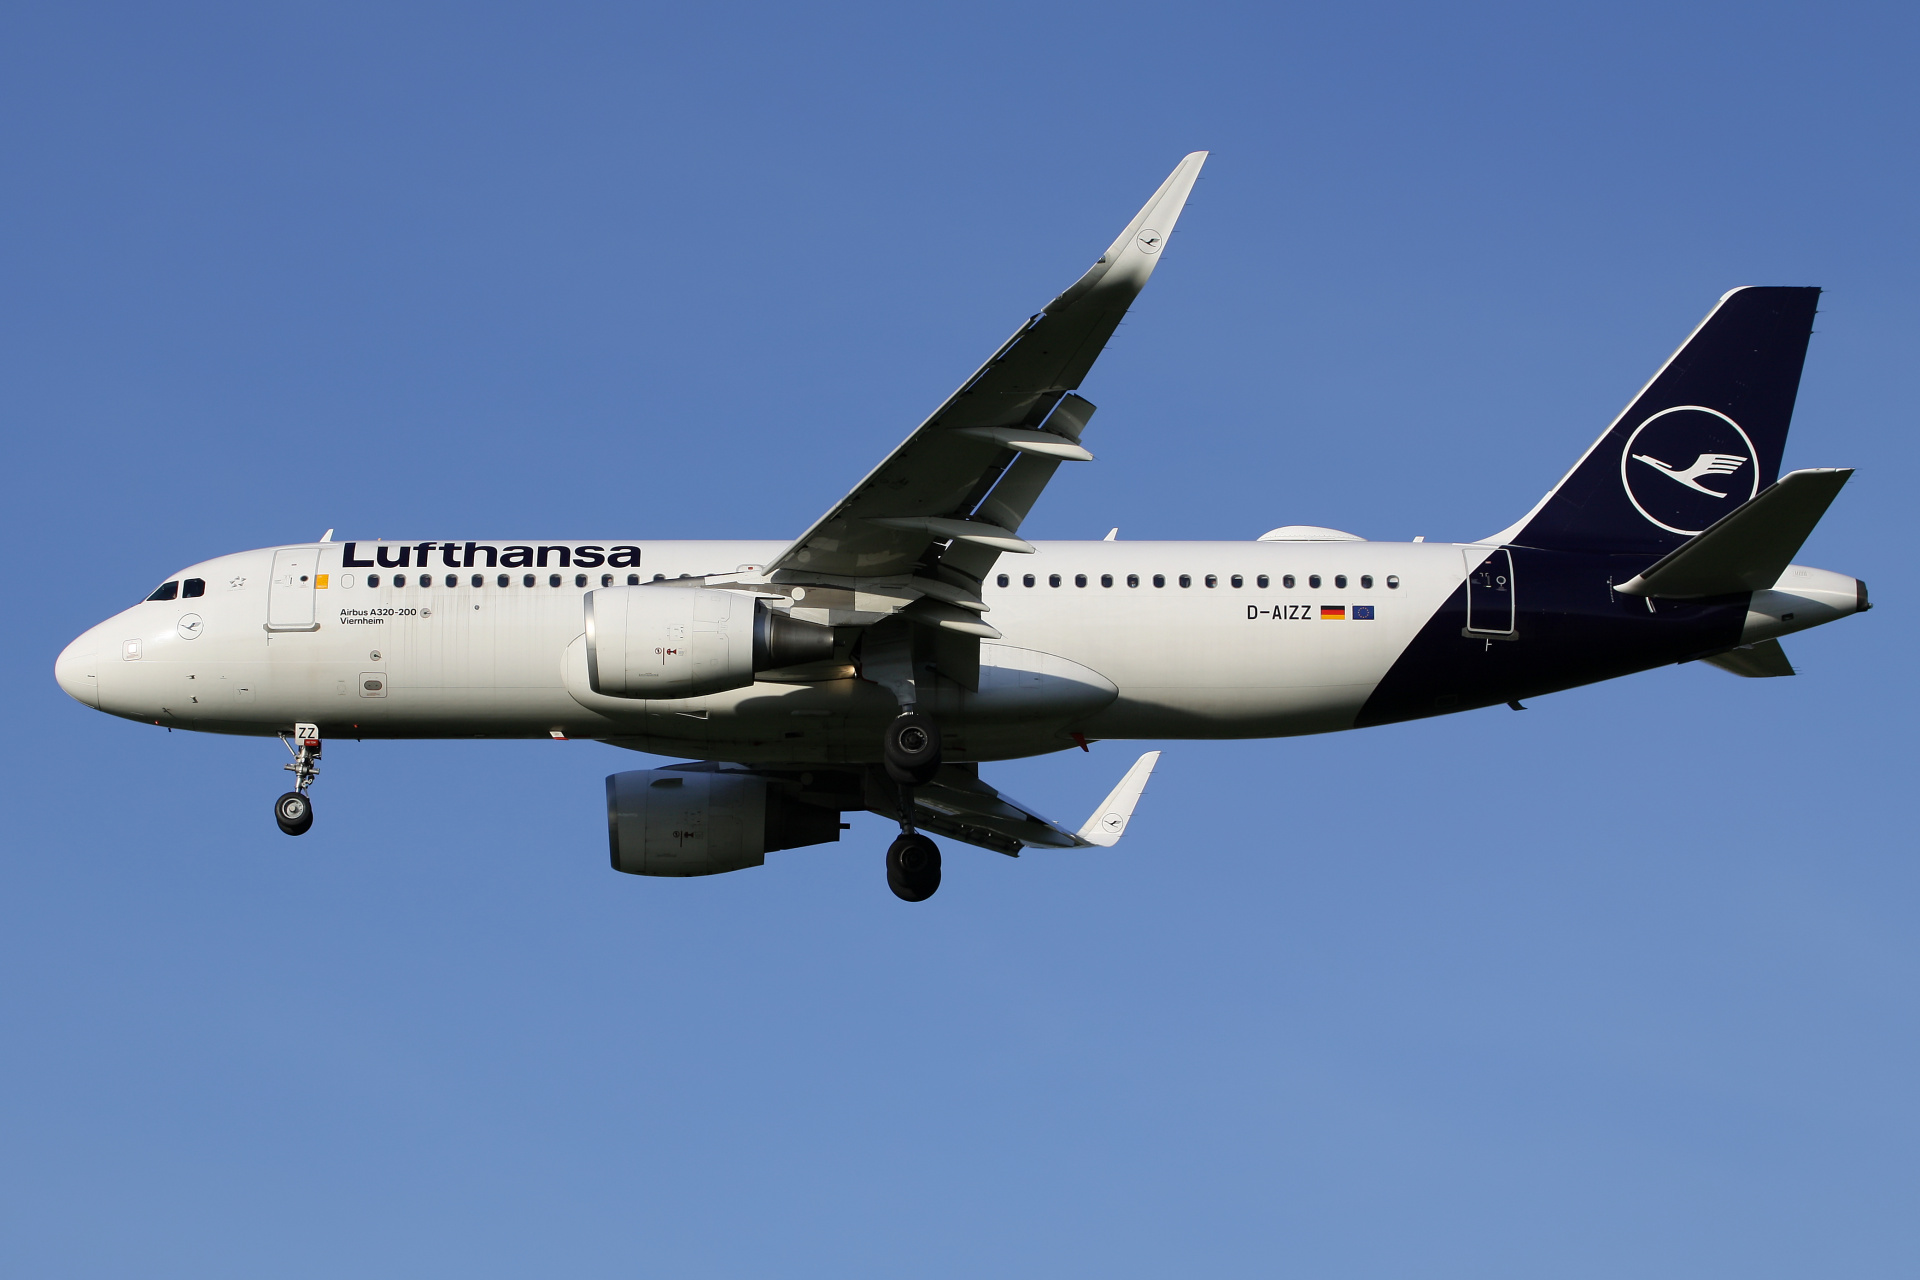 D-AIZZ (new livery) (Aircraft » EPWA Spotting » Airbus A320-200 » Lufthansa)